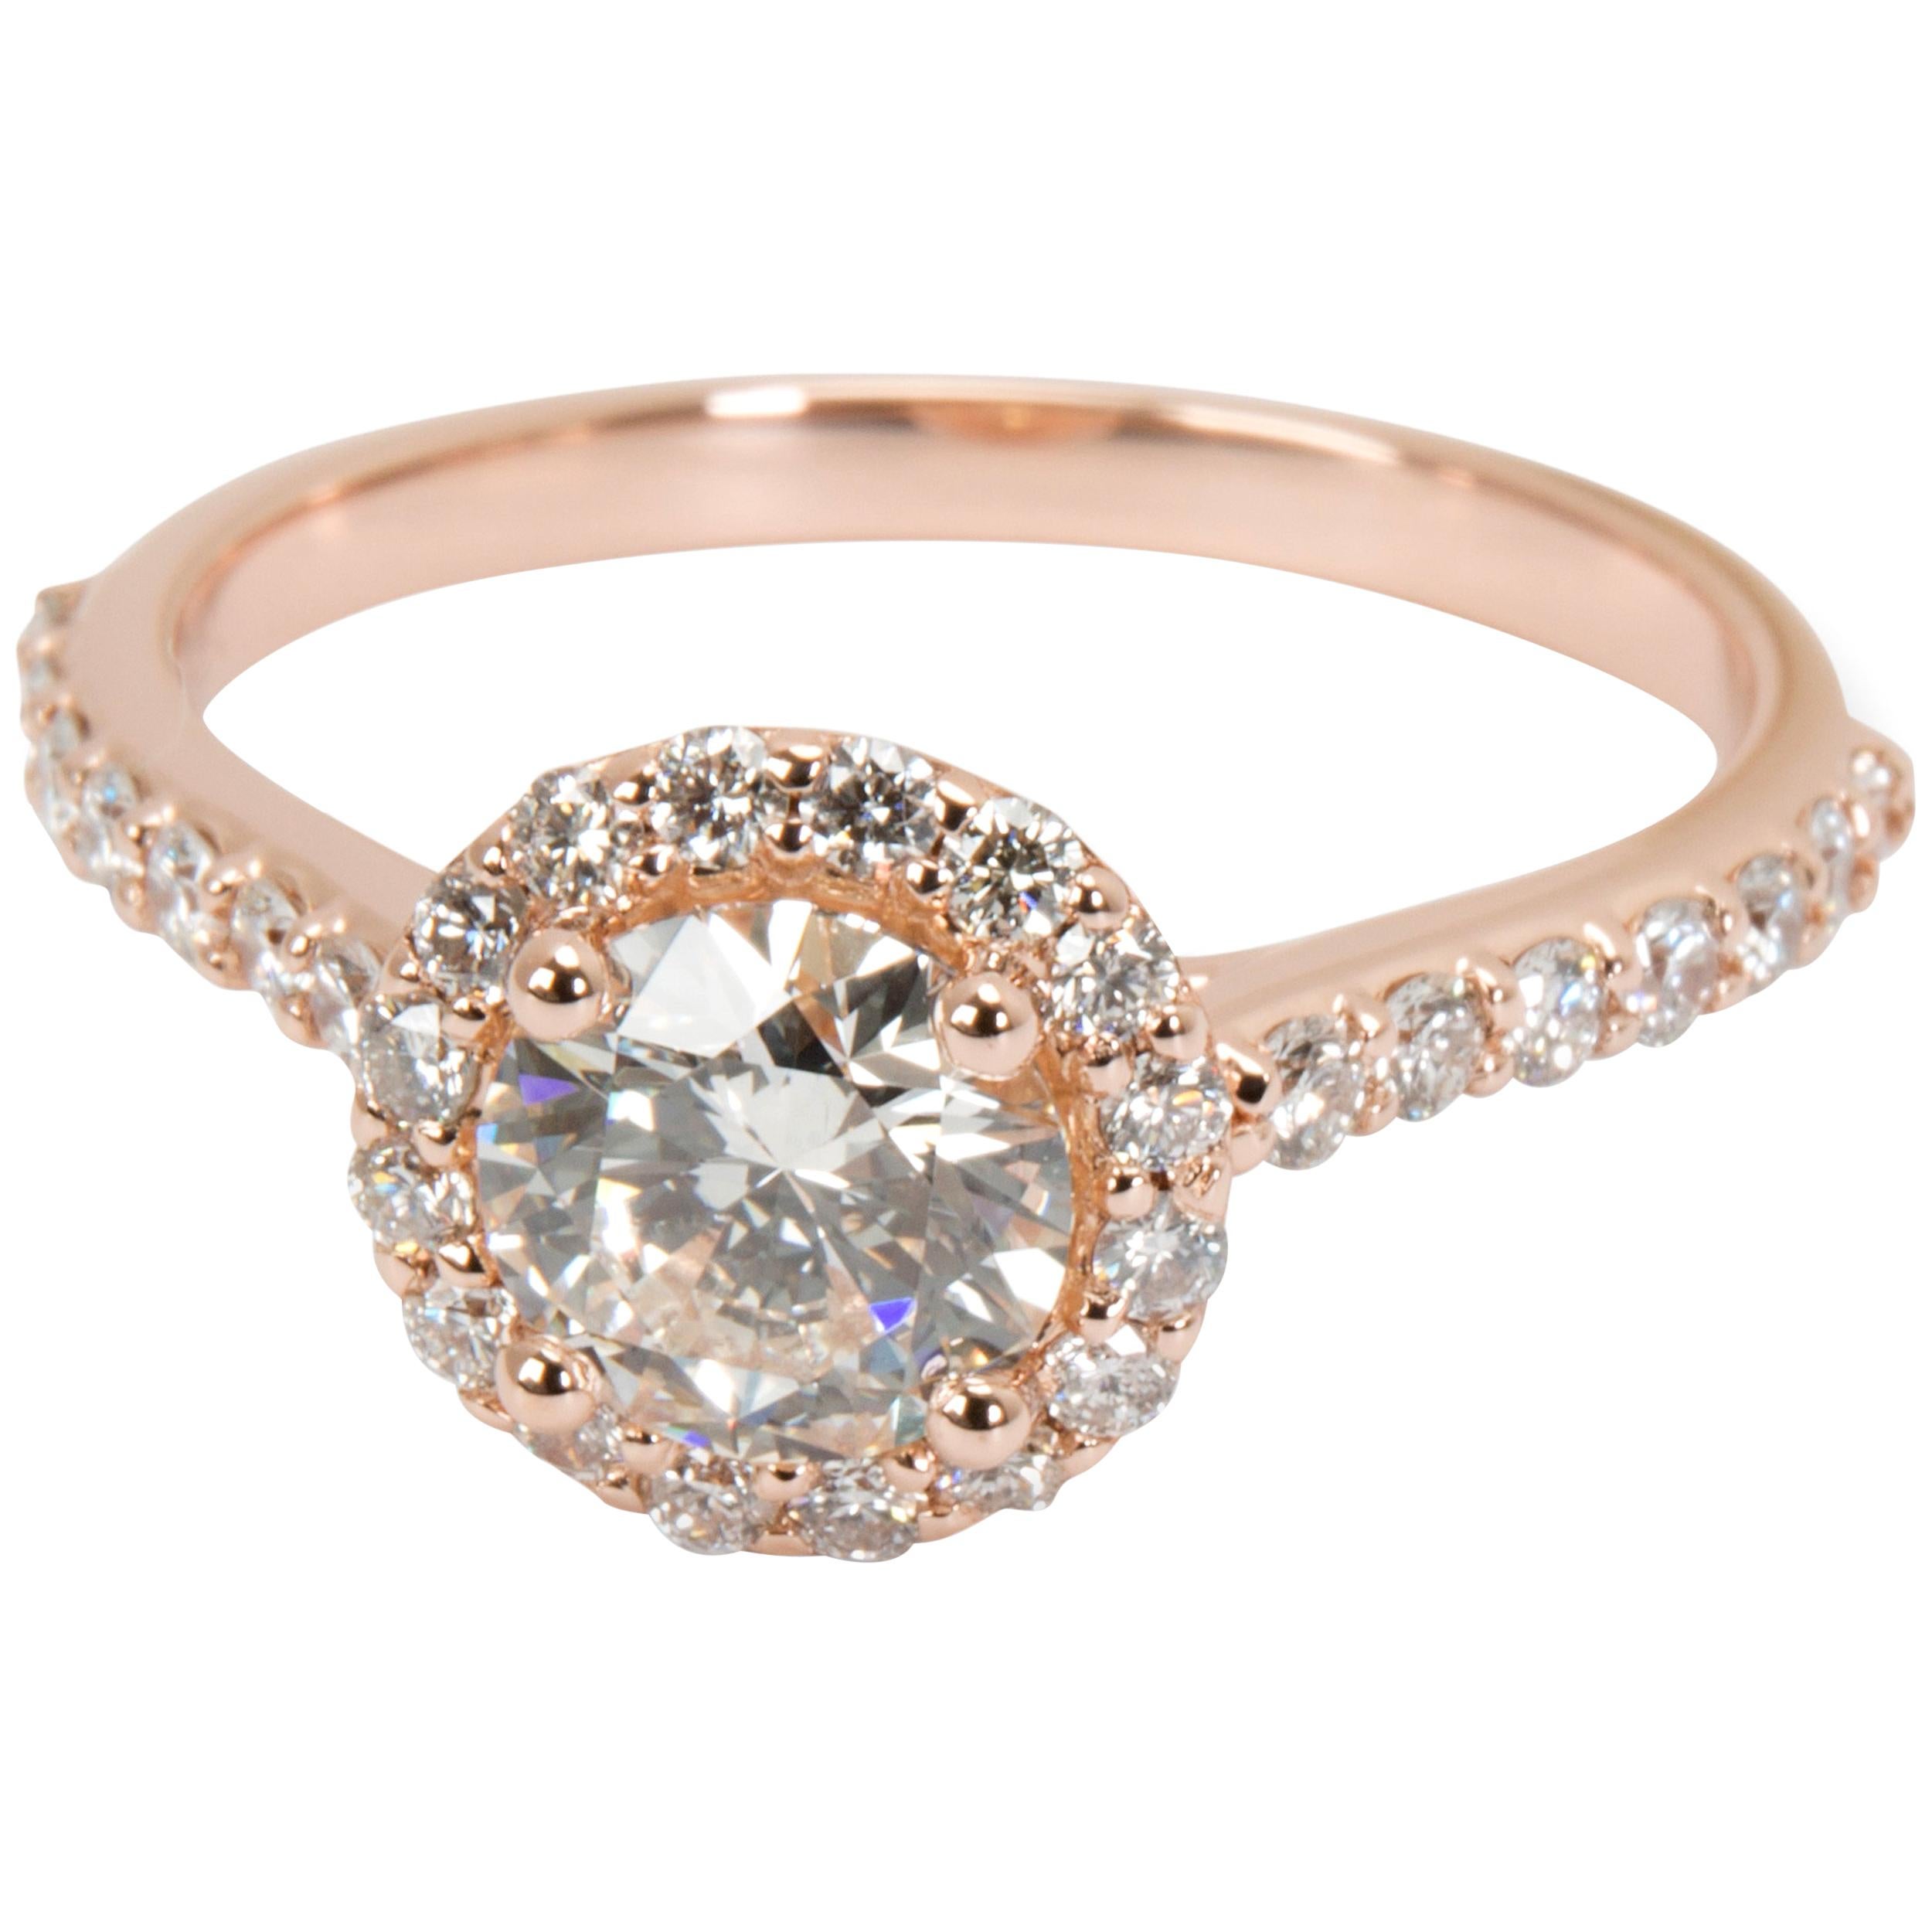 Brilliant Earth Halo Diamond Engagement Ring in 14 Karat Rose Gold